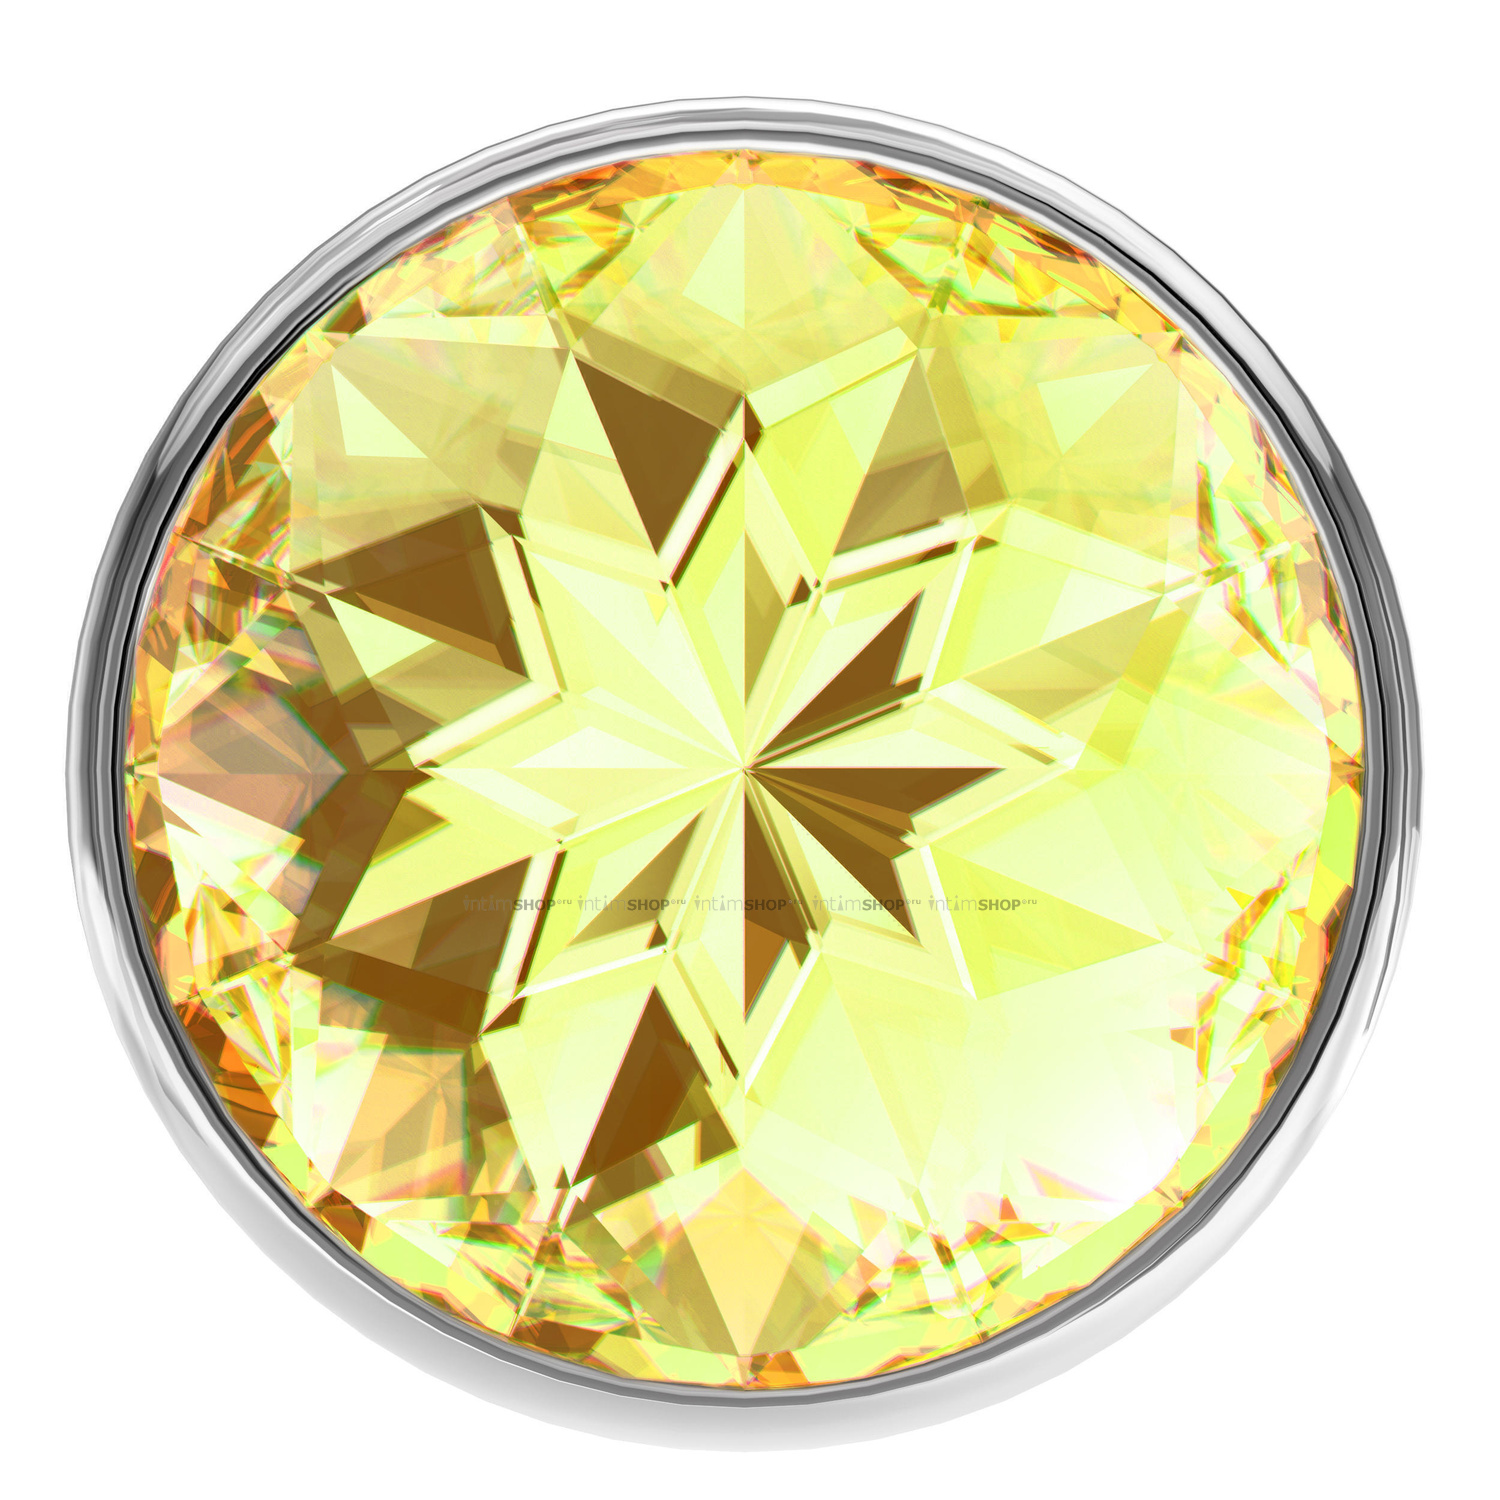 Анальная пробка Lola Toys Sparkle Large, серебристая с жёлтым кристаллом